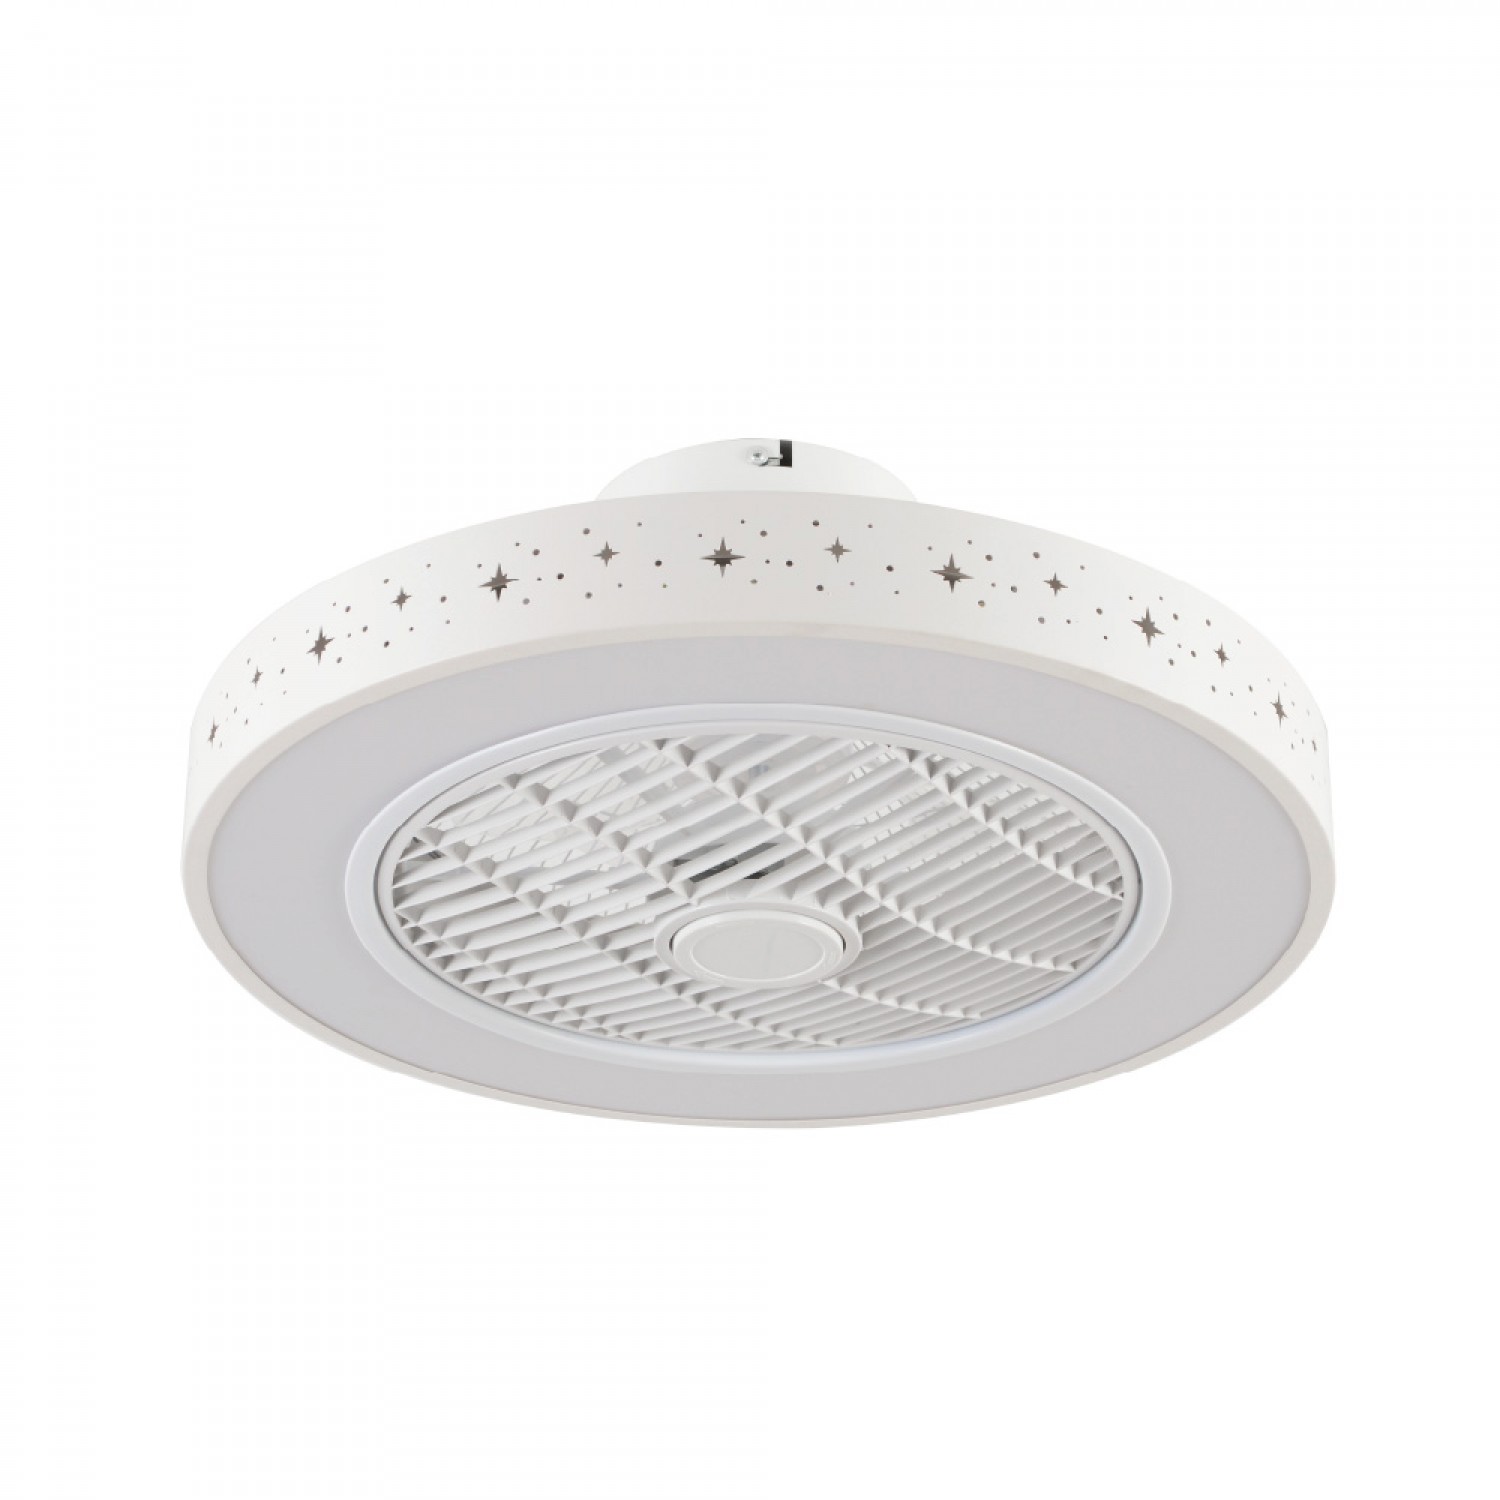 Almanor 36W 3CCT LED Fan Light in White Color (101000410)